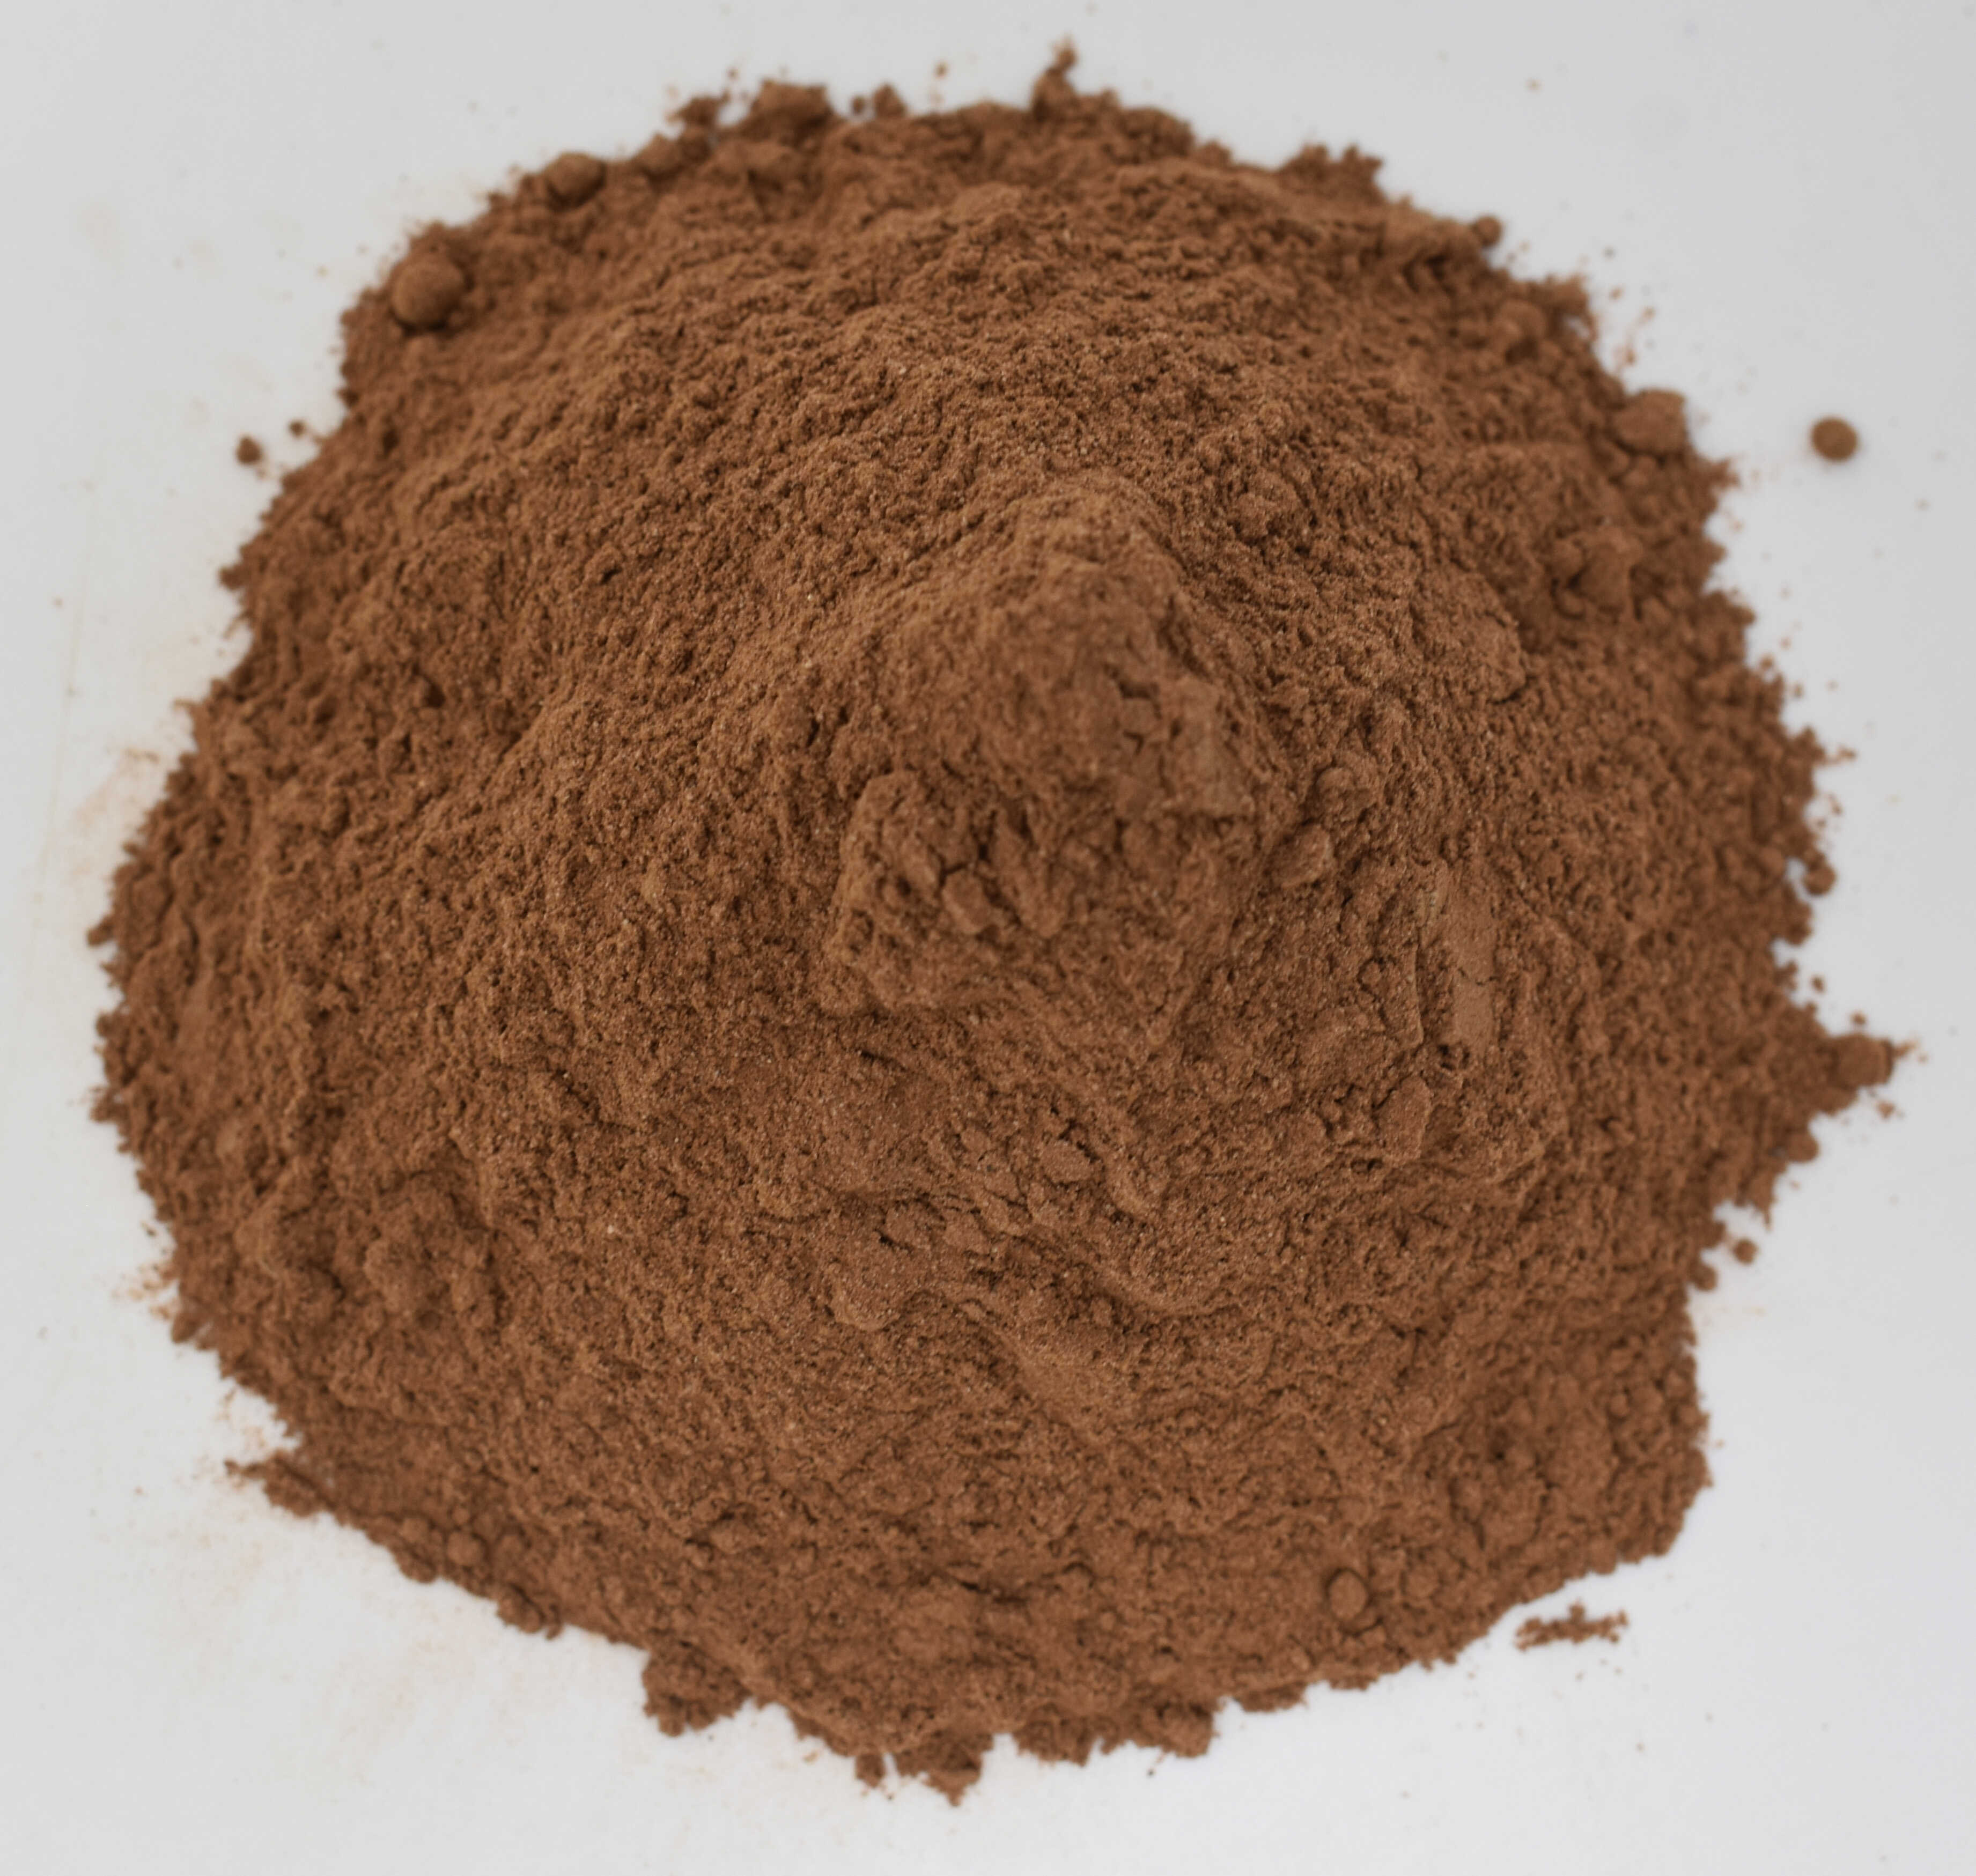 Kola Nut 12% Caffeine Extract - Top Photo